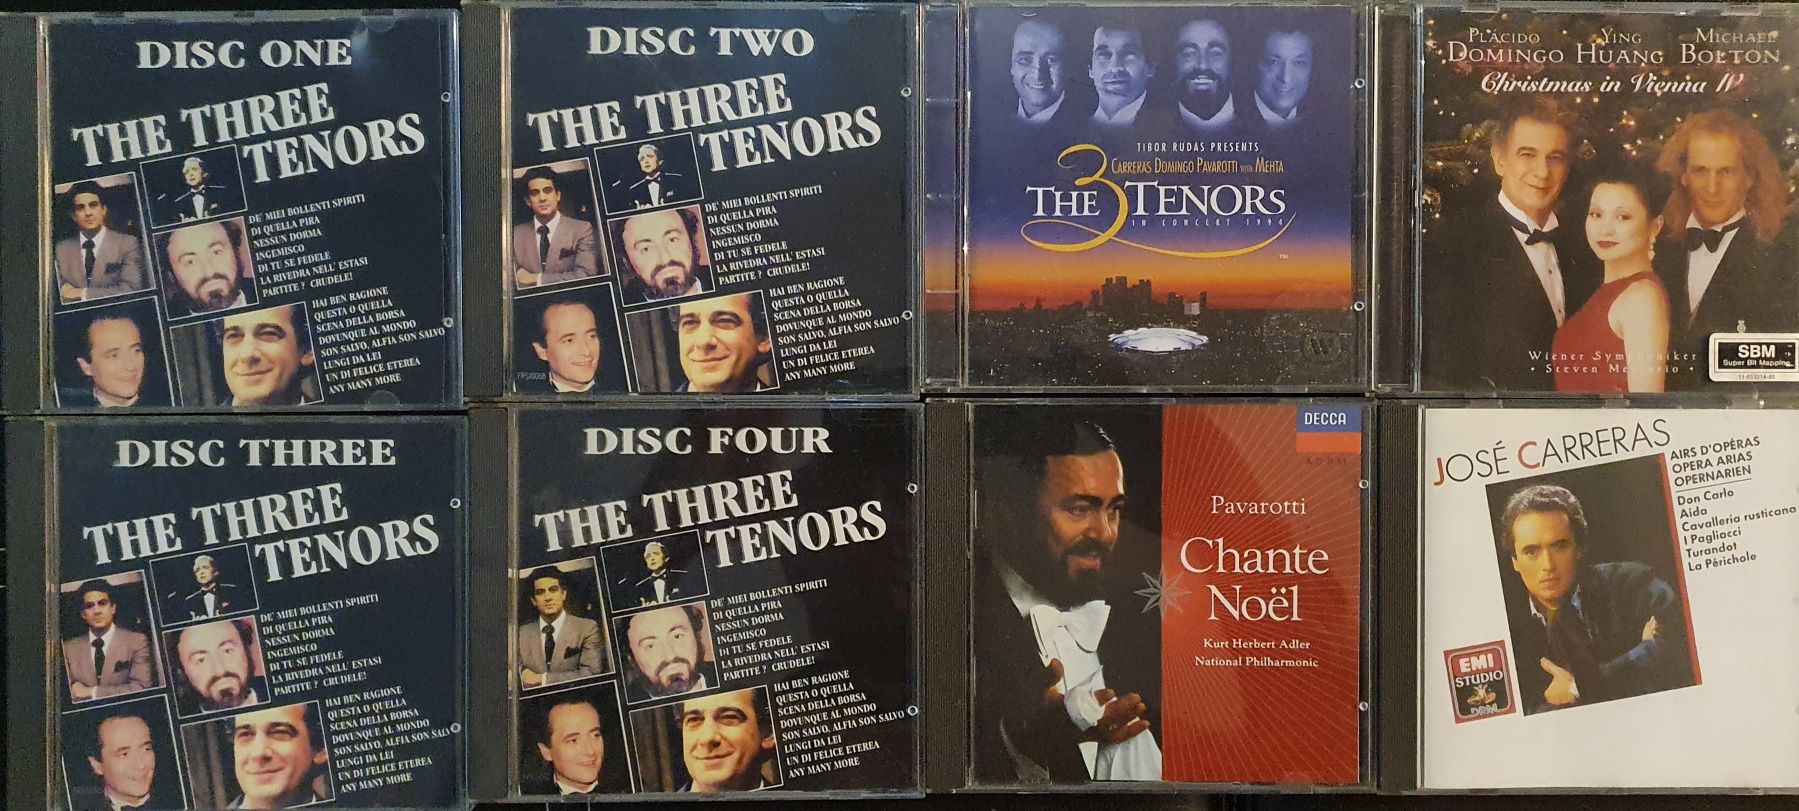 Cds operas, 3 tenores Pavarotti, Carreras, Domingo, Callas, Bocelli.